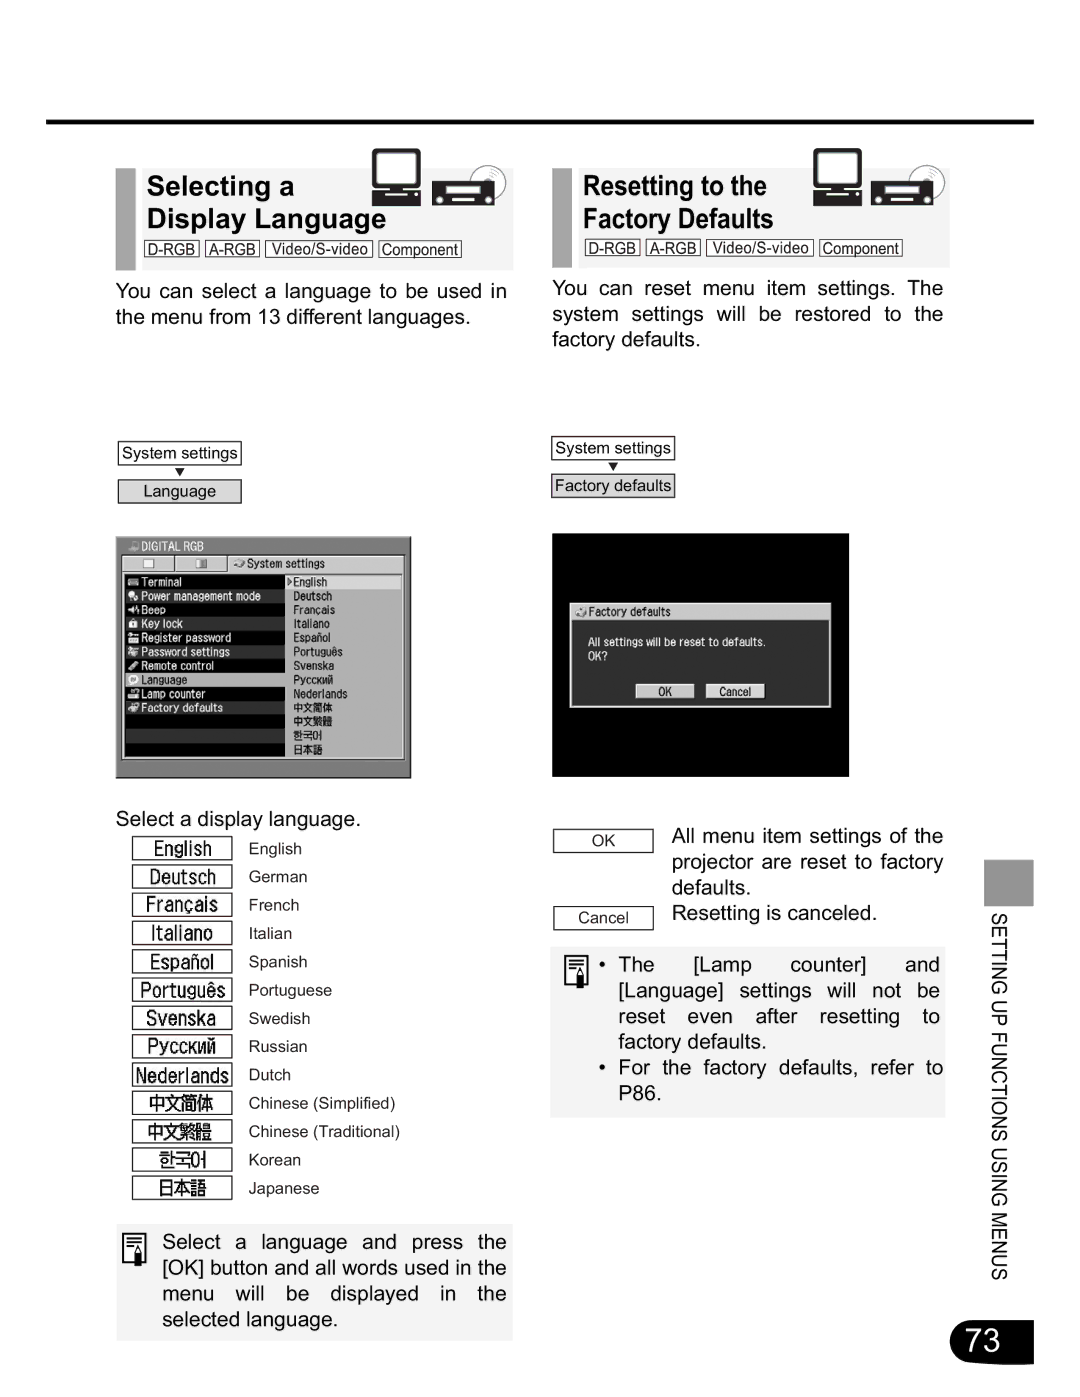 Canon SX20 manual Selecting a, Display Language 